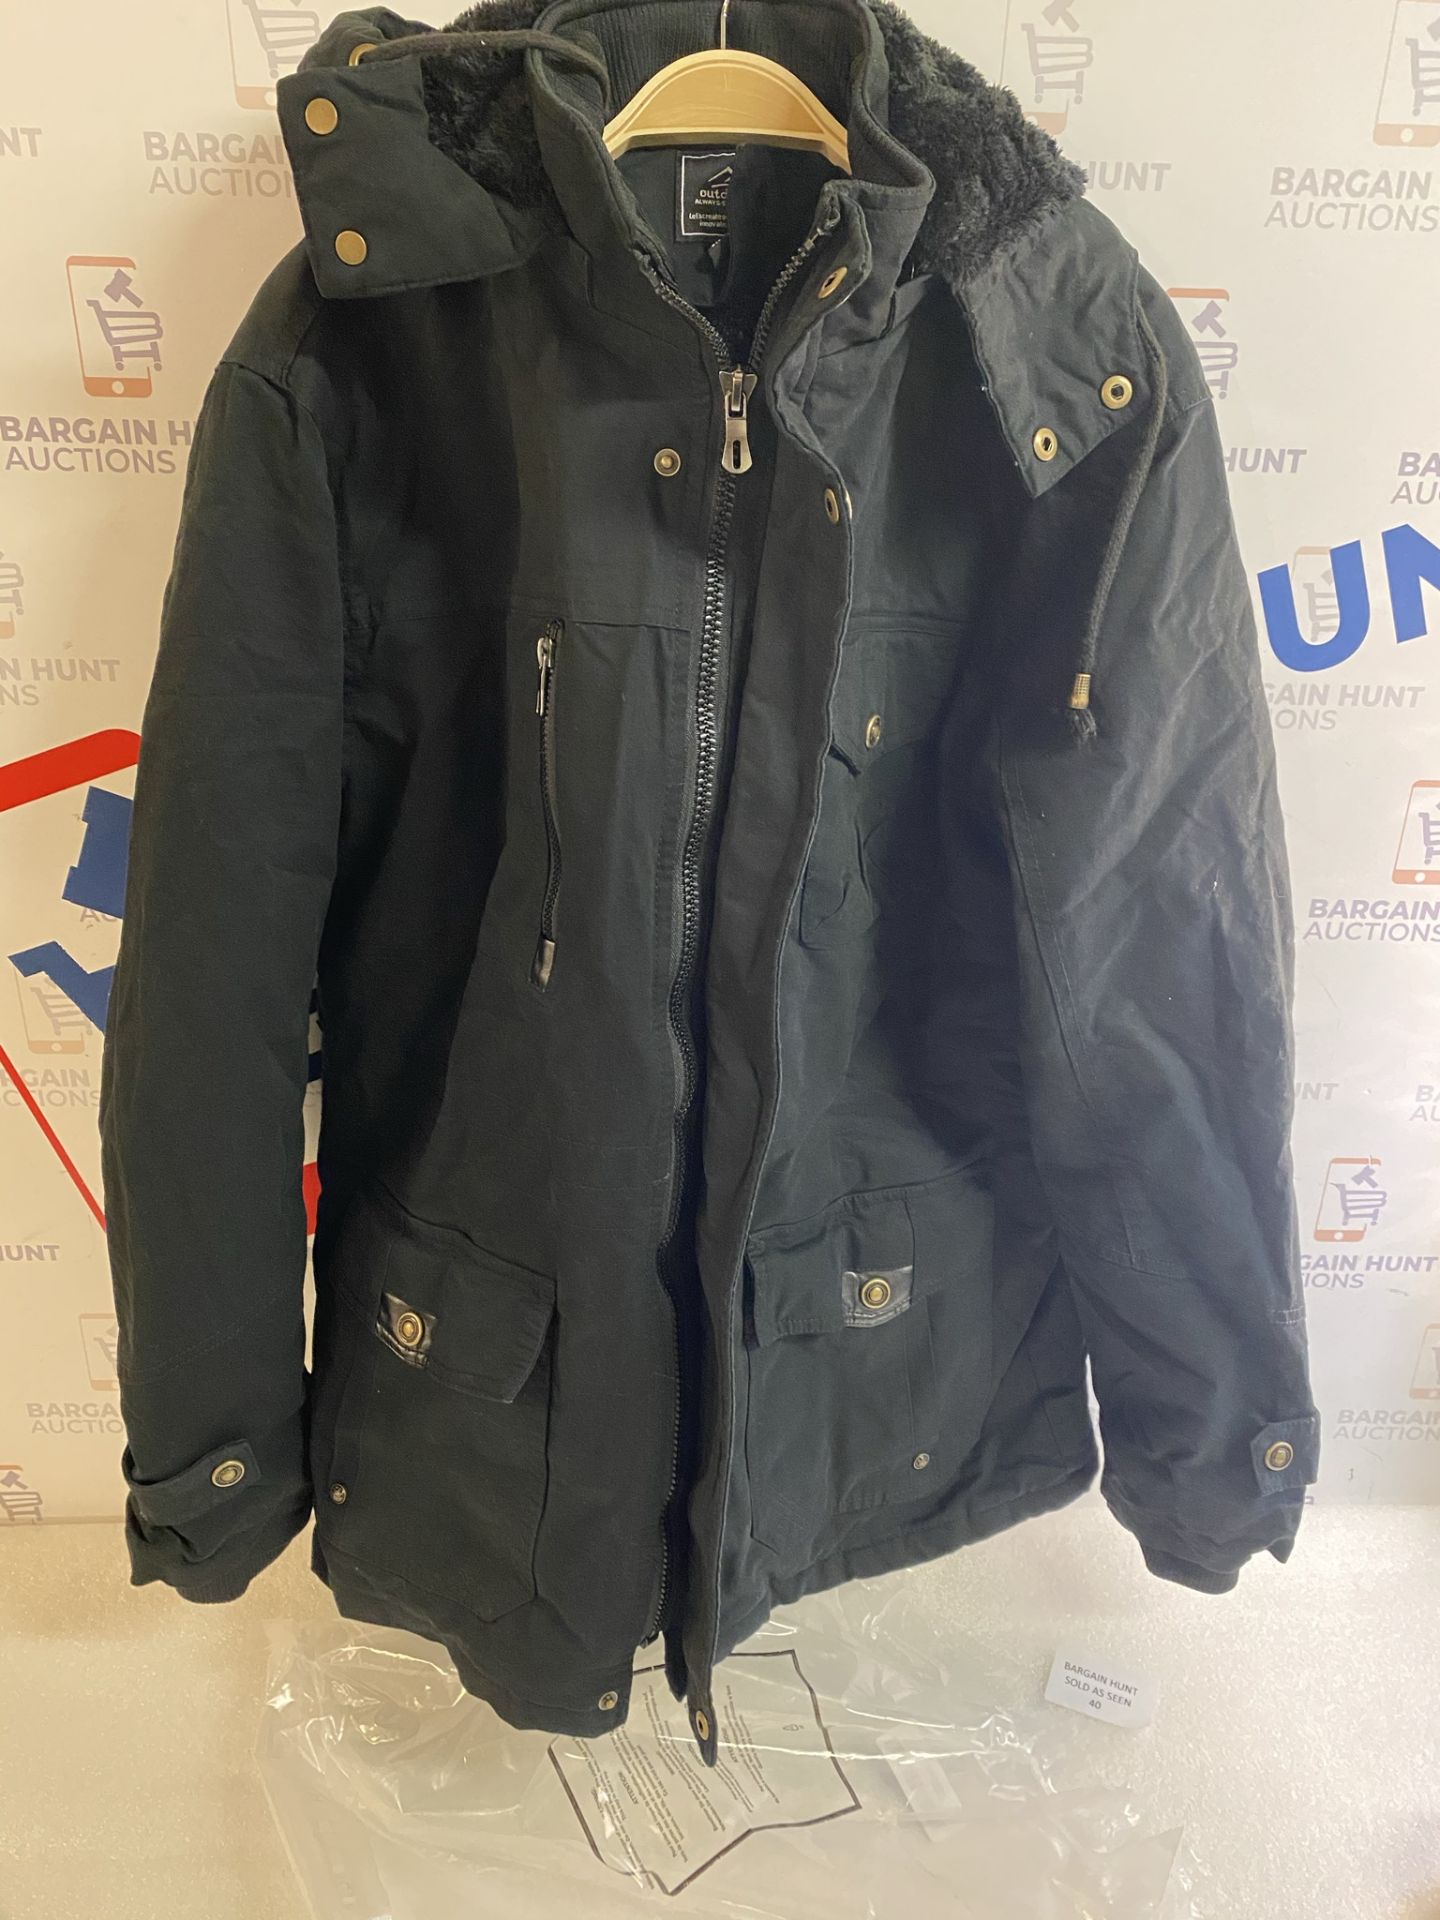 RRP £58.99 KEFITEVD Men's Fleece Jacket Military Jacket with Removable Hood, Medium - Image 2 of 2